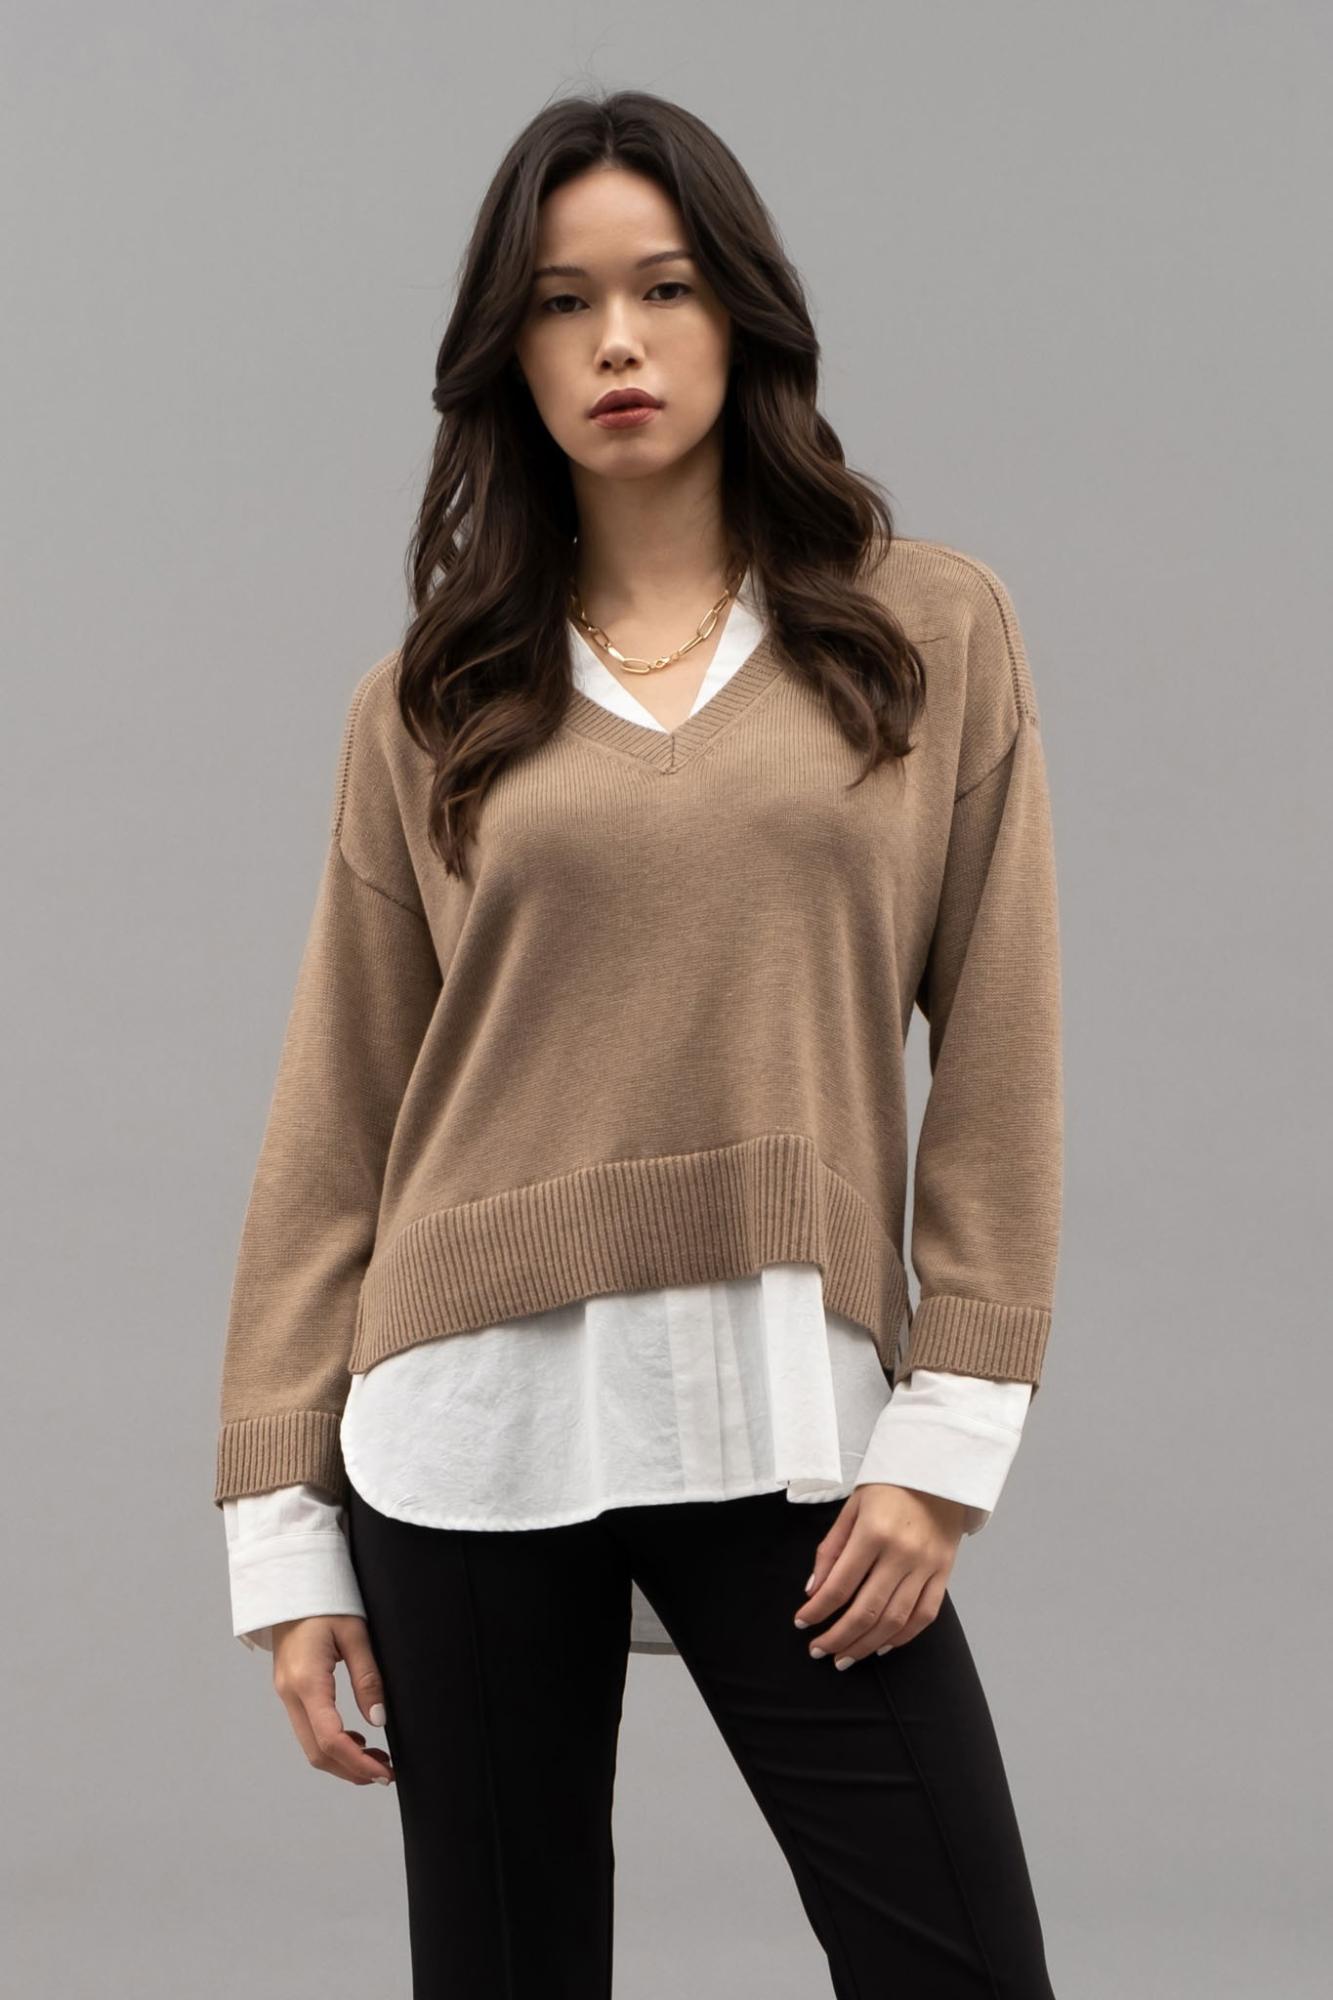 Classy Clean Girl Layered Sweater